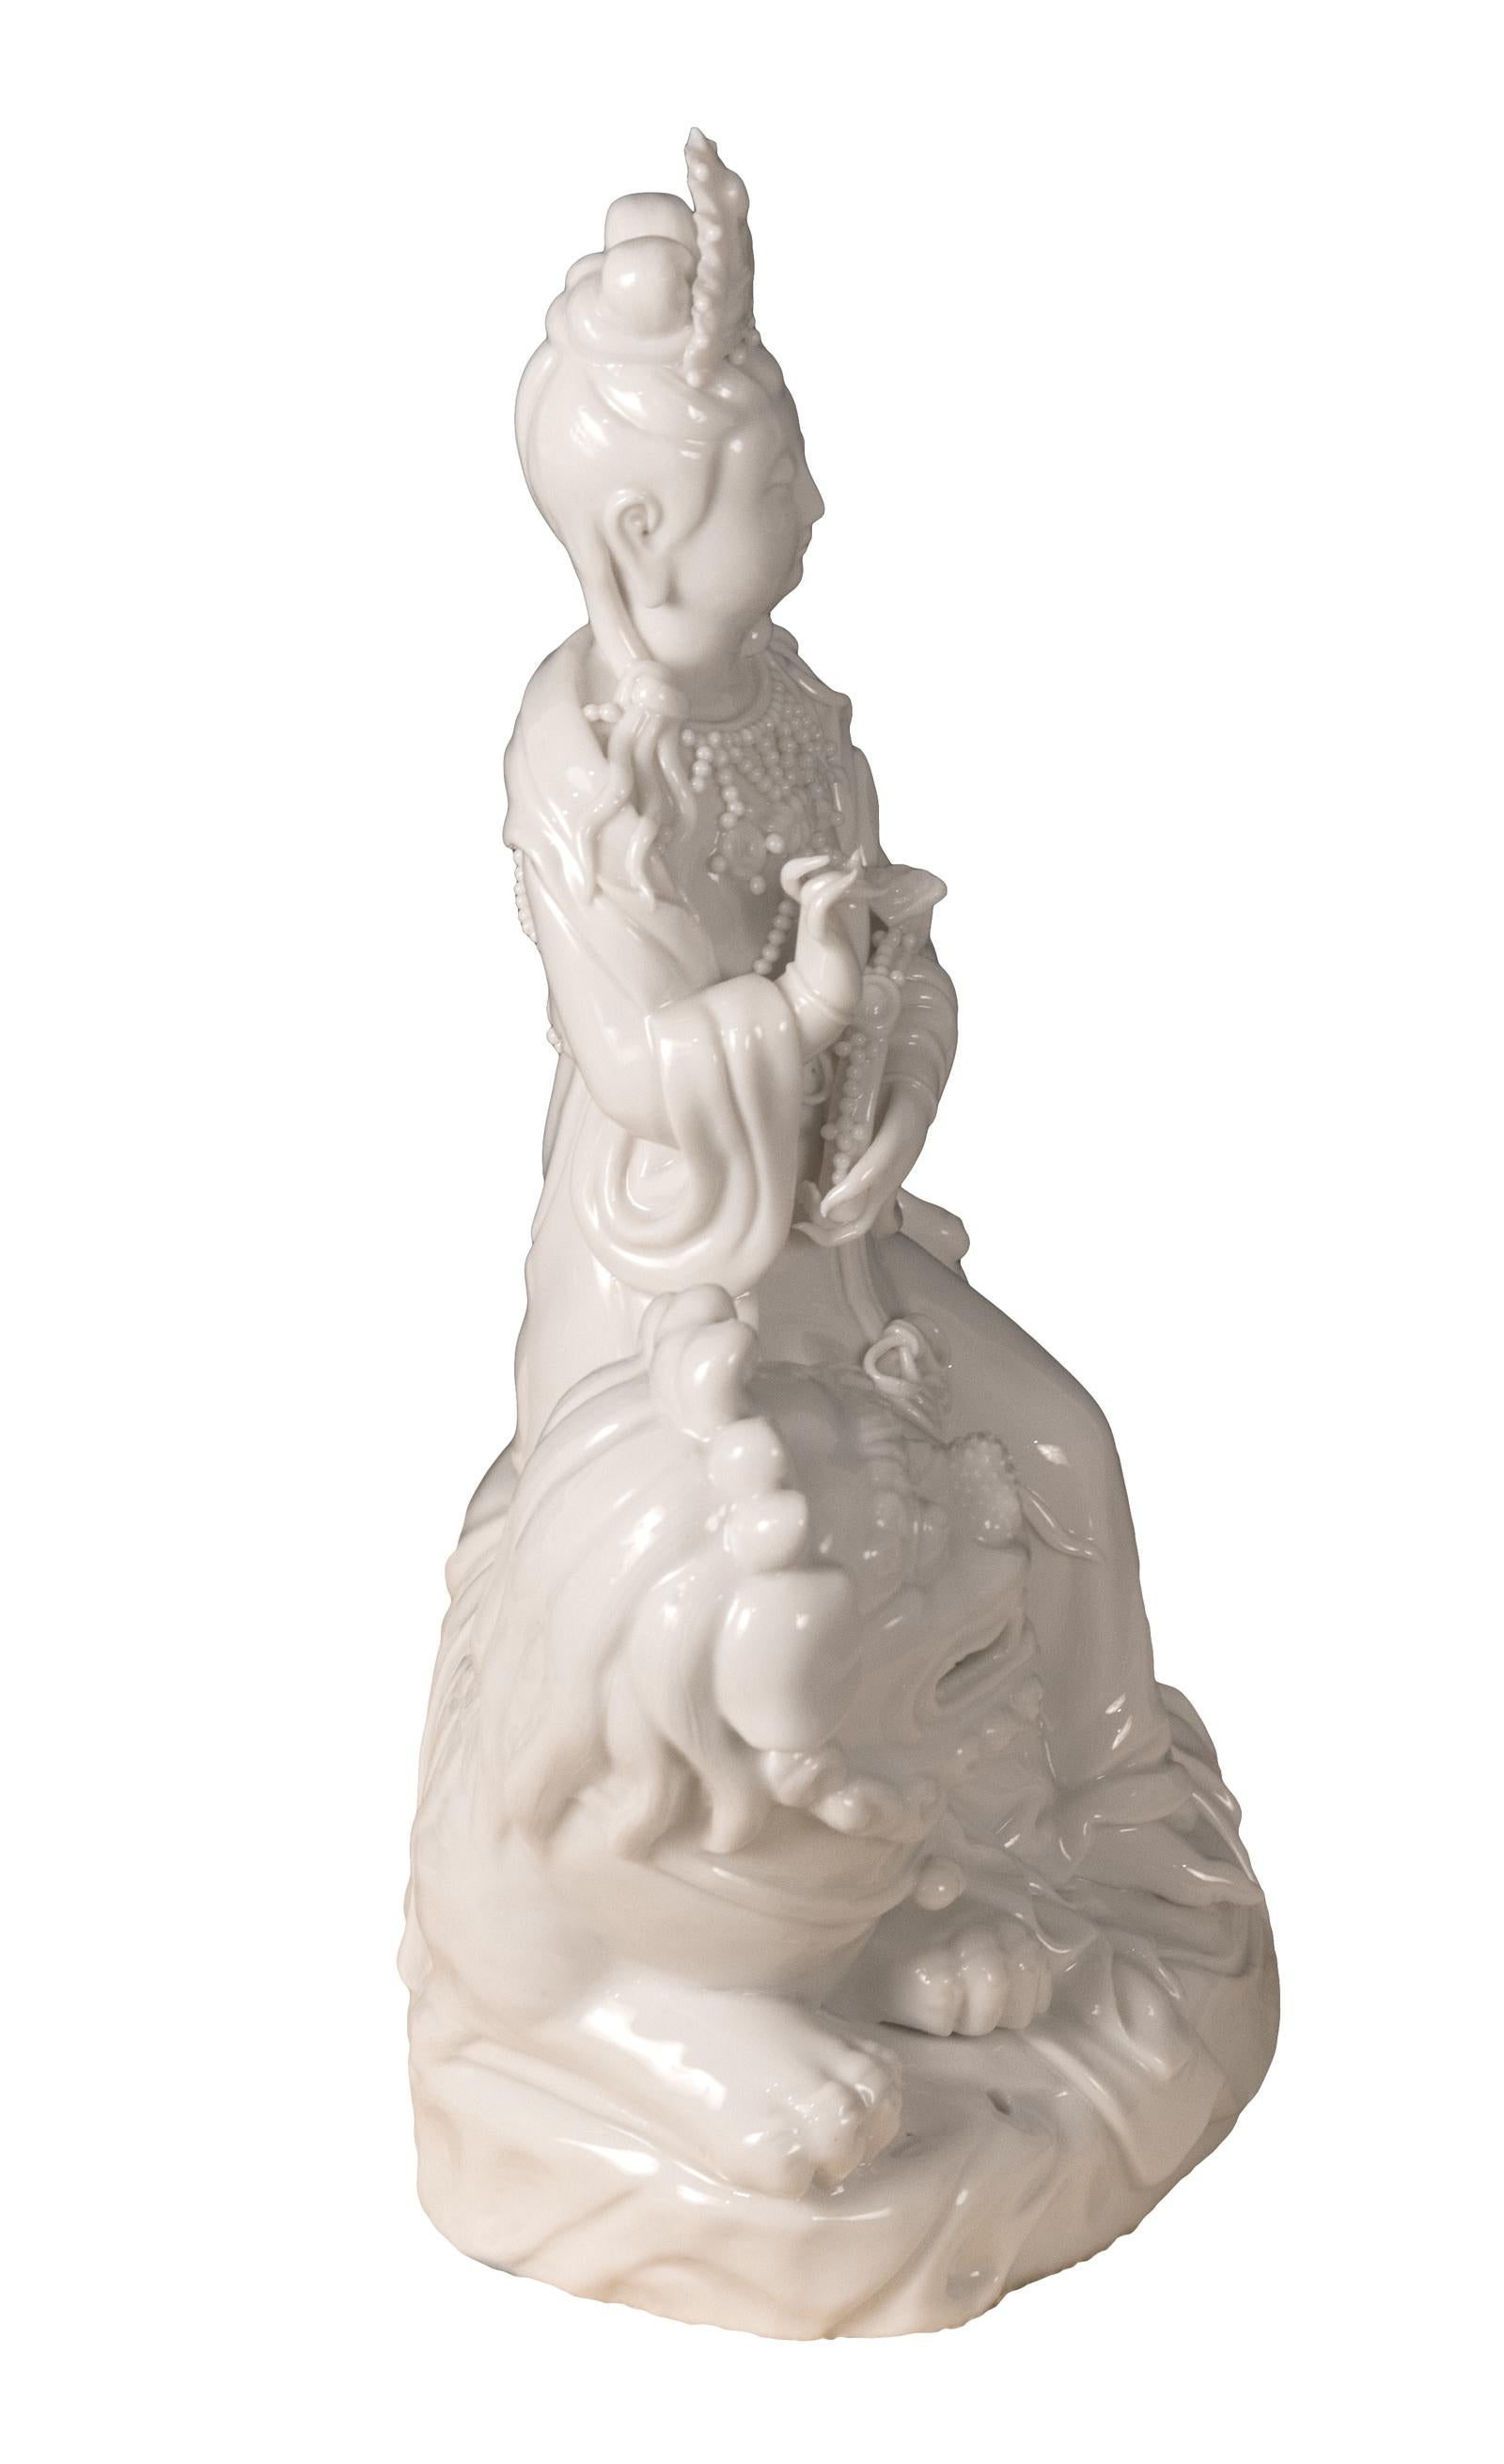 Blanc de chine (Dehua) porcelain figural group of Quan Yin on Foo Dog or Temple Lion (circa 1970),

China

Measures: 11.25 x 8 x 4.5.